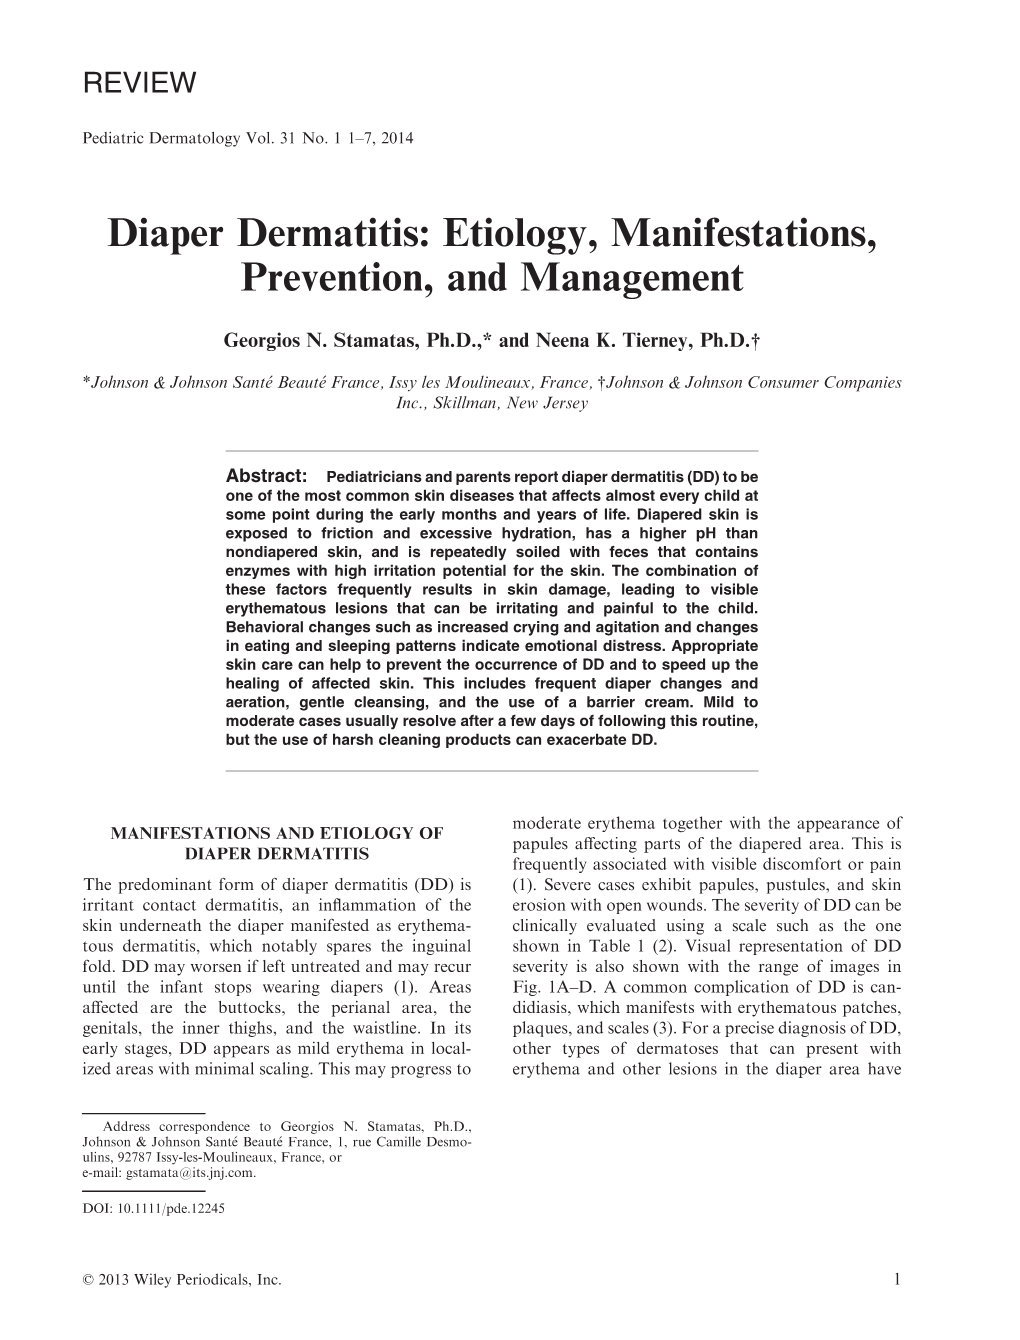 Diaper Dermatitis: Etiology, Manifestations, Prevention, and Management